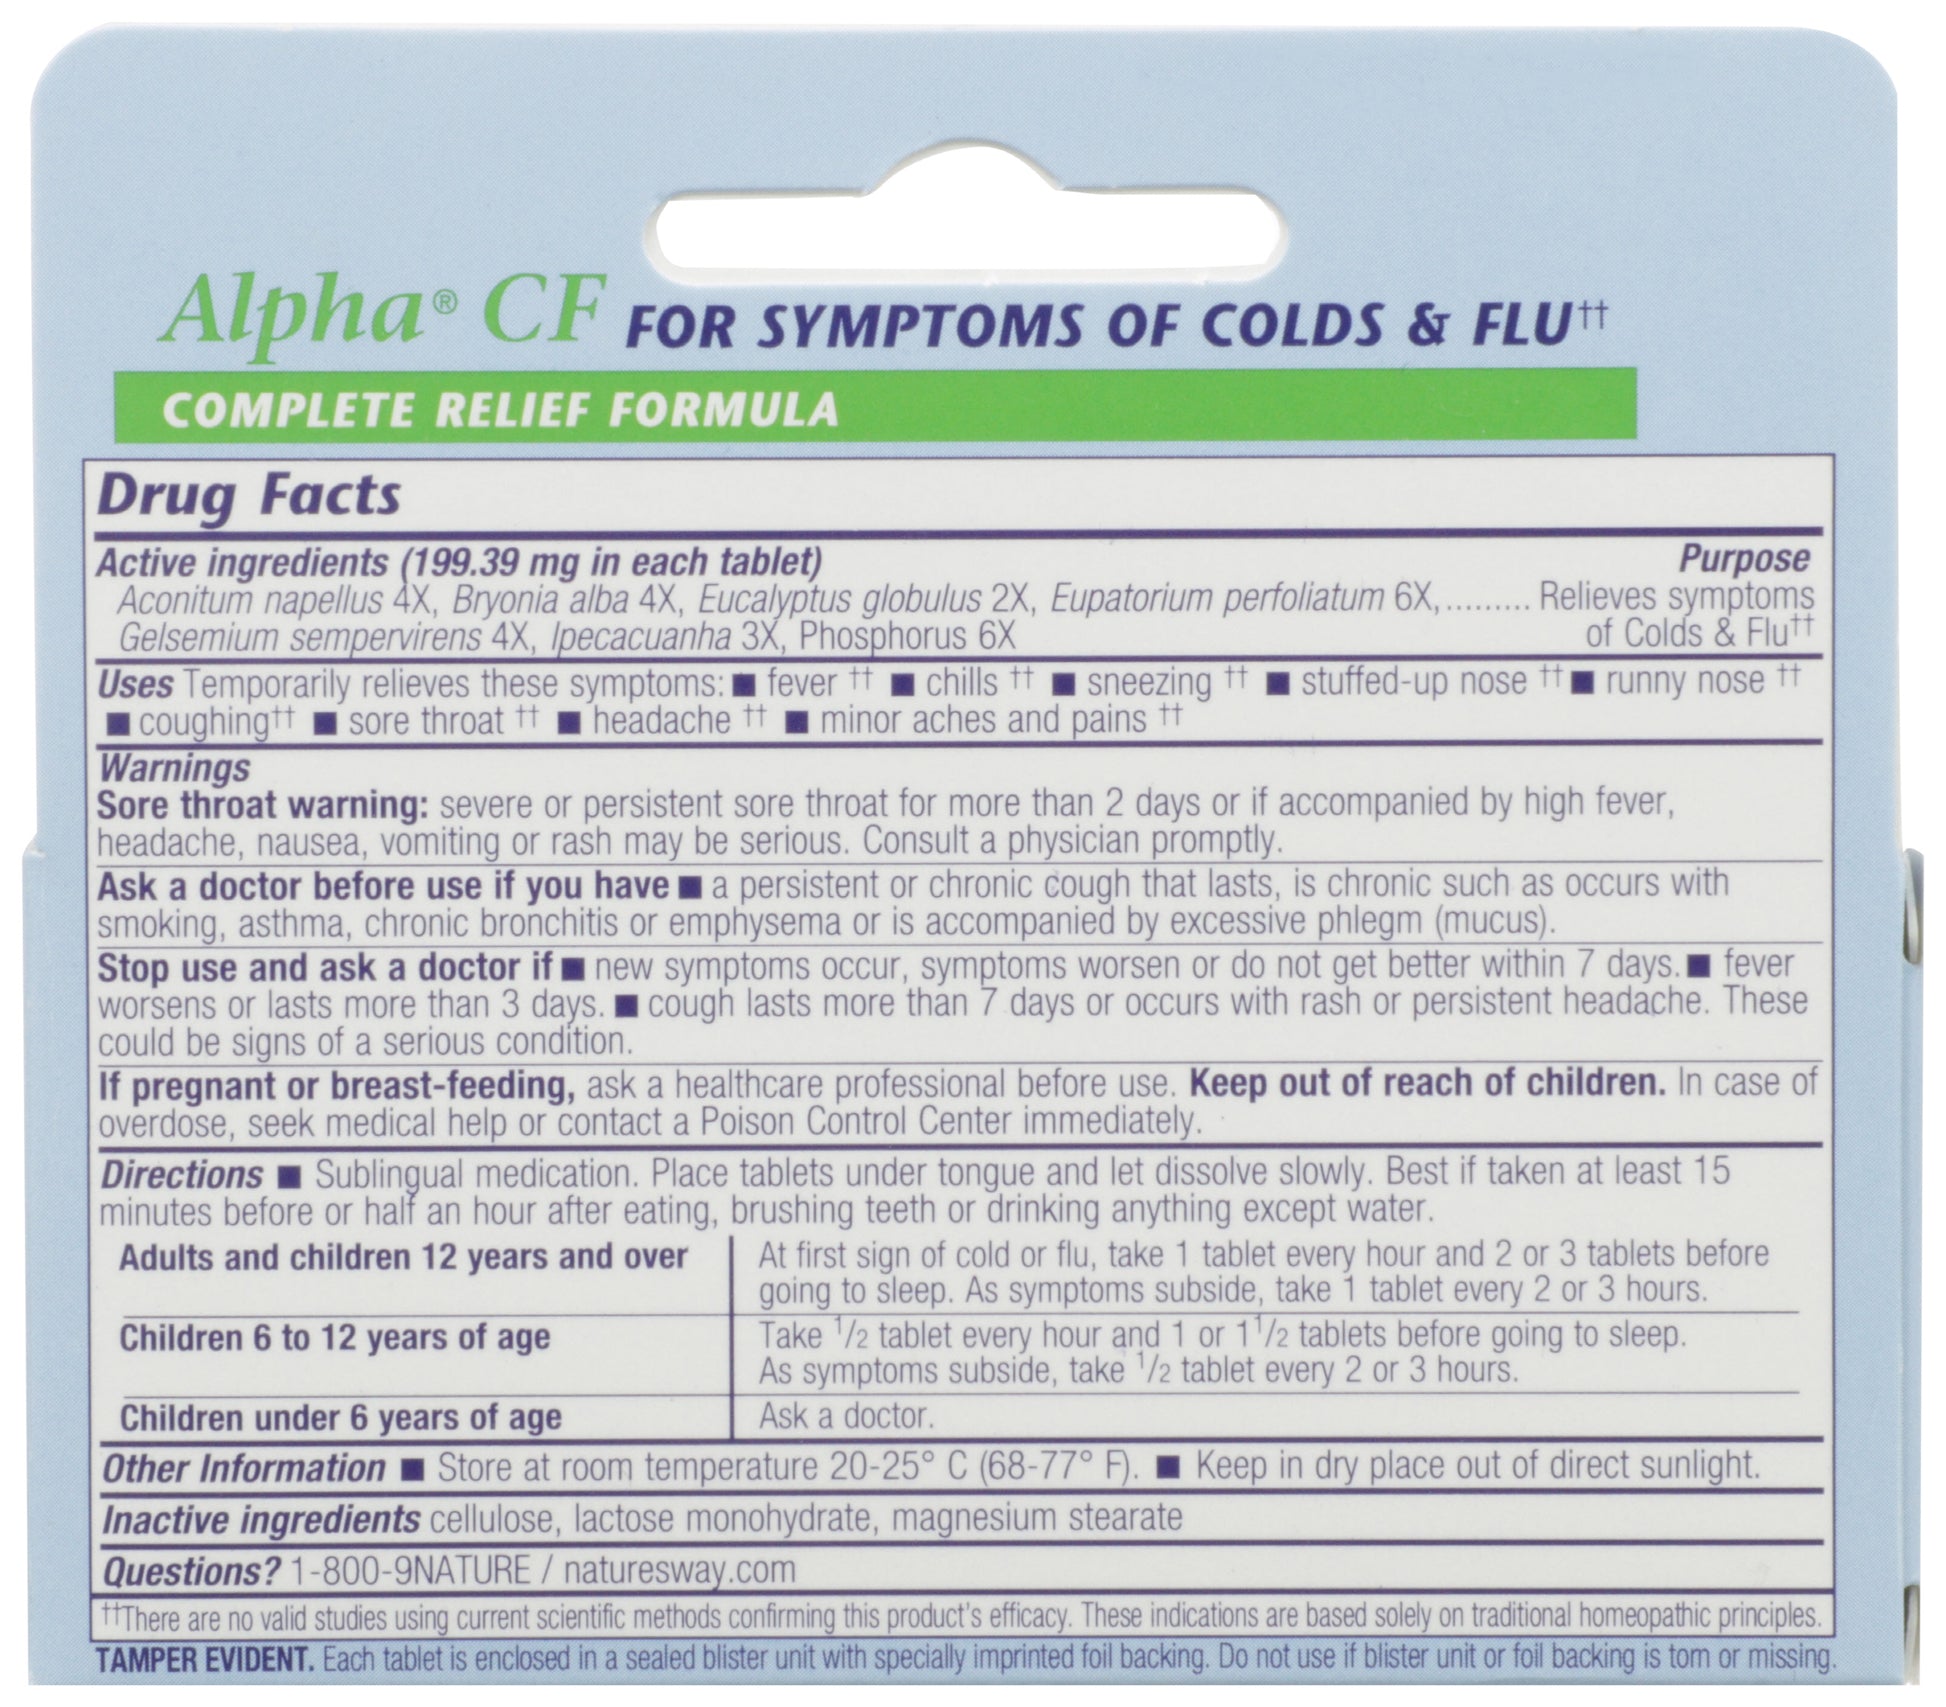 B&T Colds & Flu Alpha CF 40 Tablets Back of Box